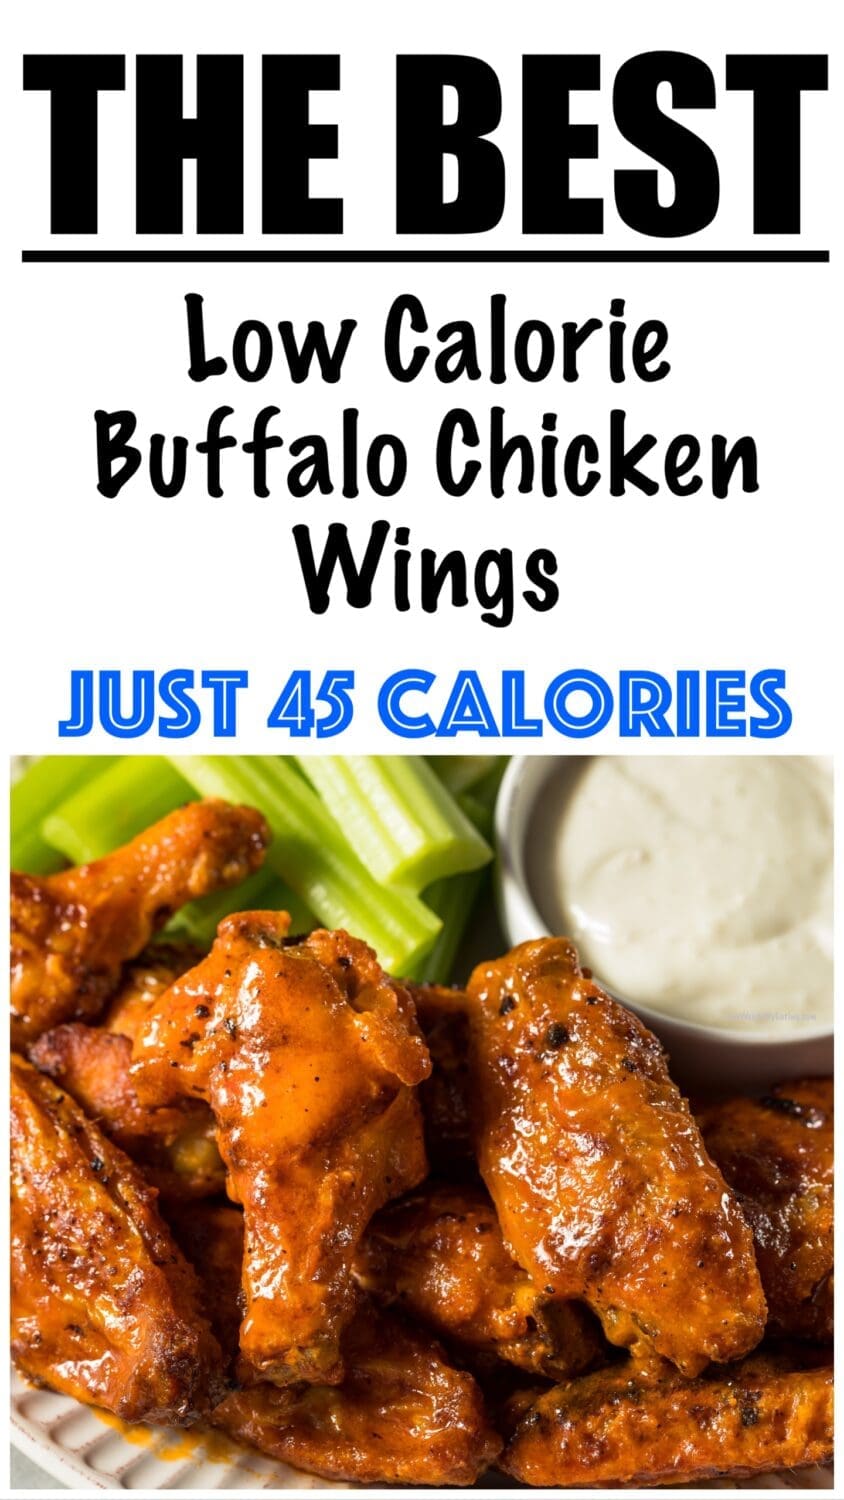 Low Calorie Buffalo Chicken Wings